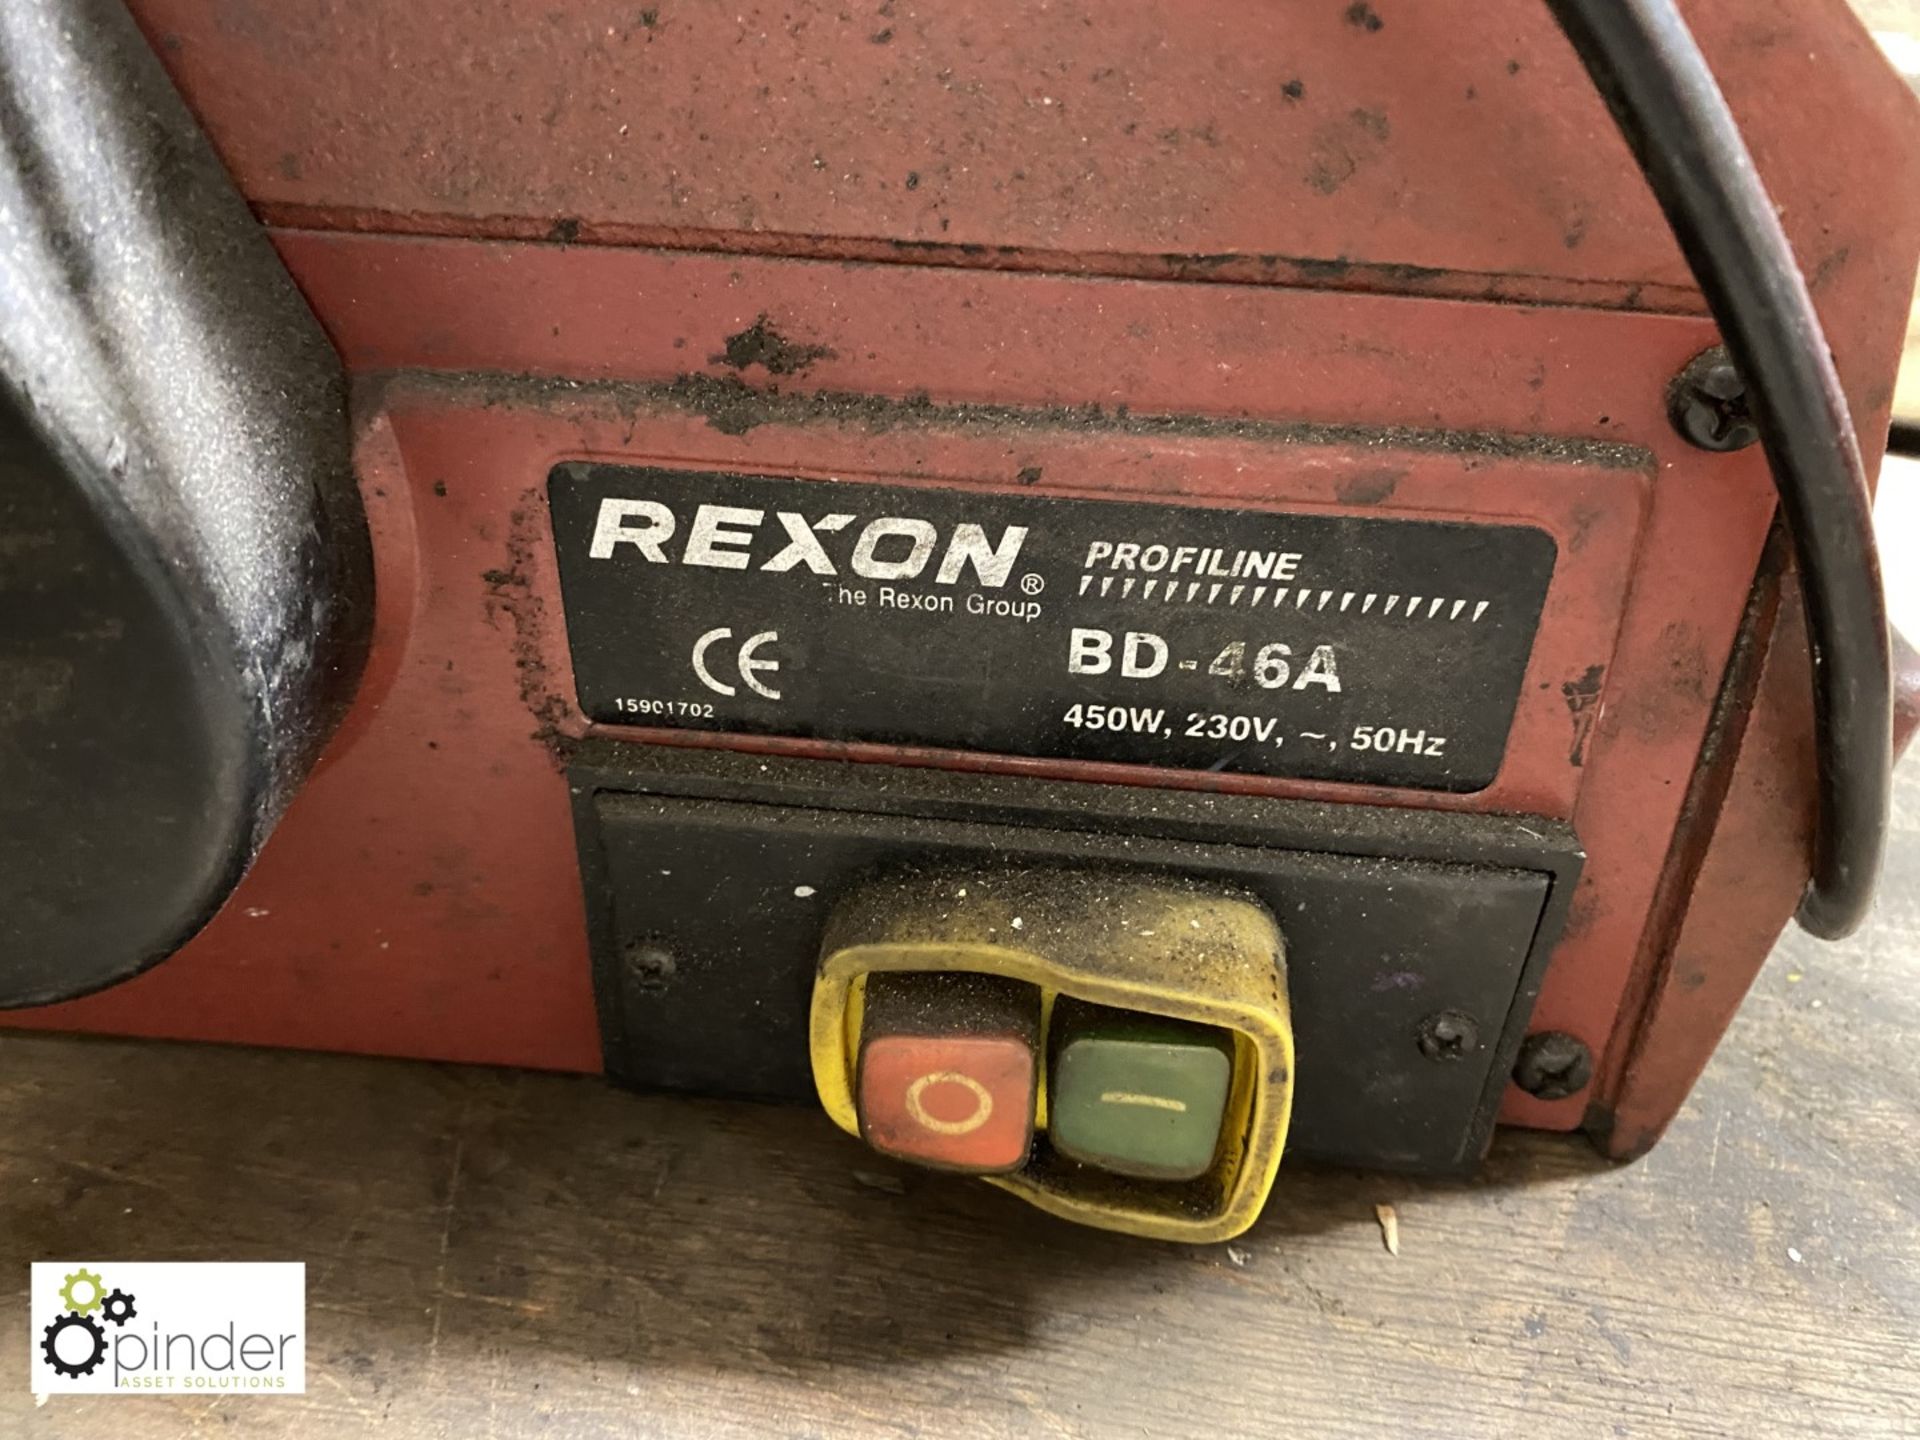 Rexon BD-46A Belt and Disc Sander, 240volts - Image 3 of 3